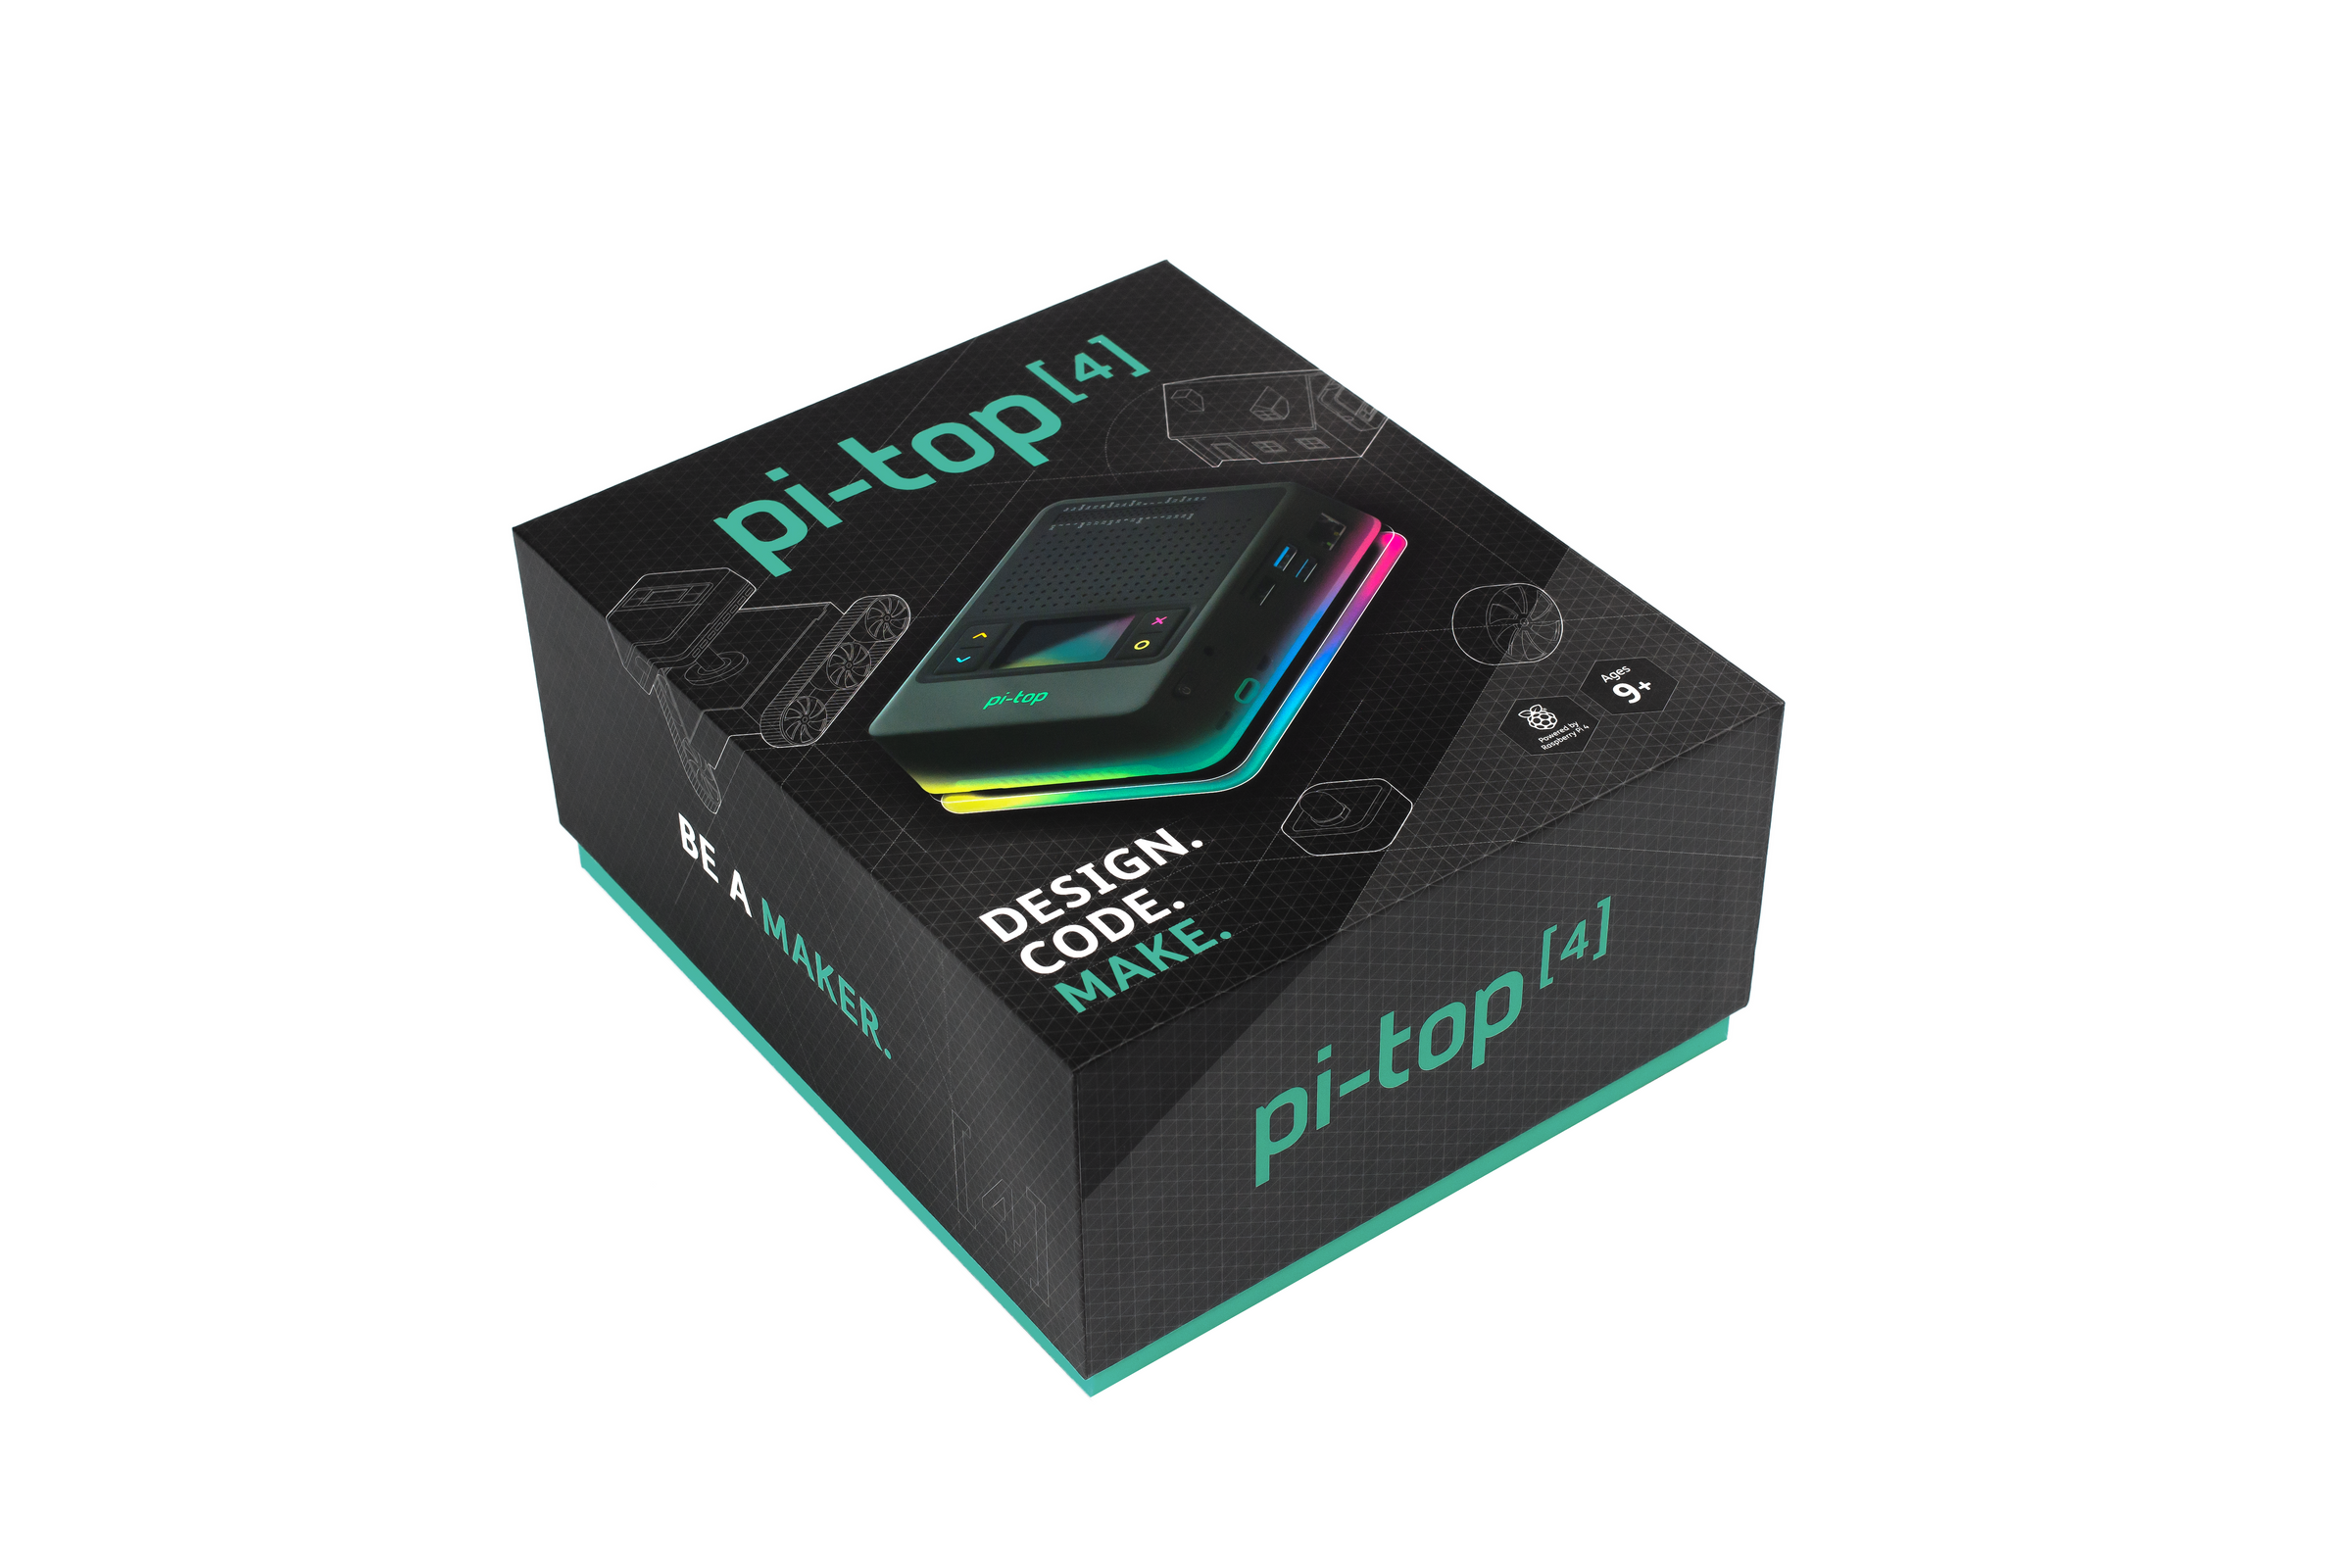 Pi-Top 4 with Raspberry Pi 4 (4GB)